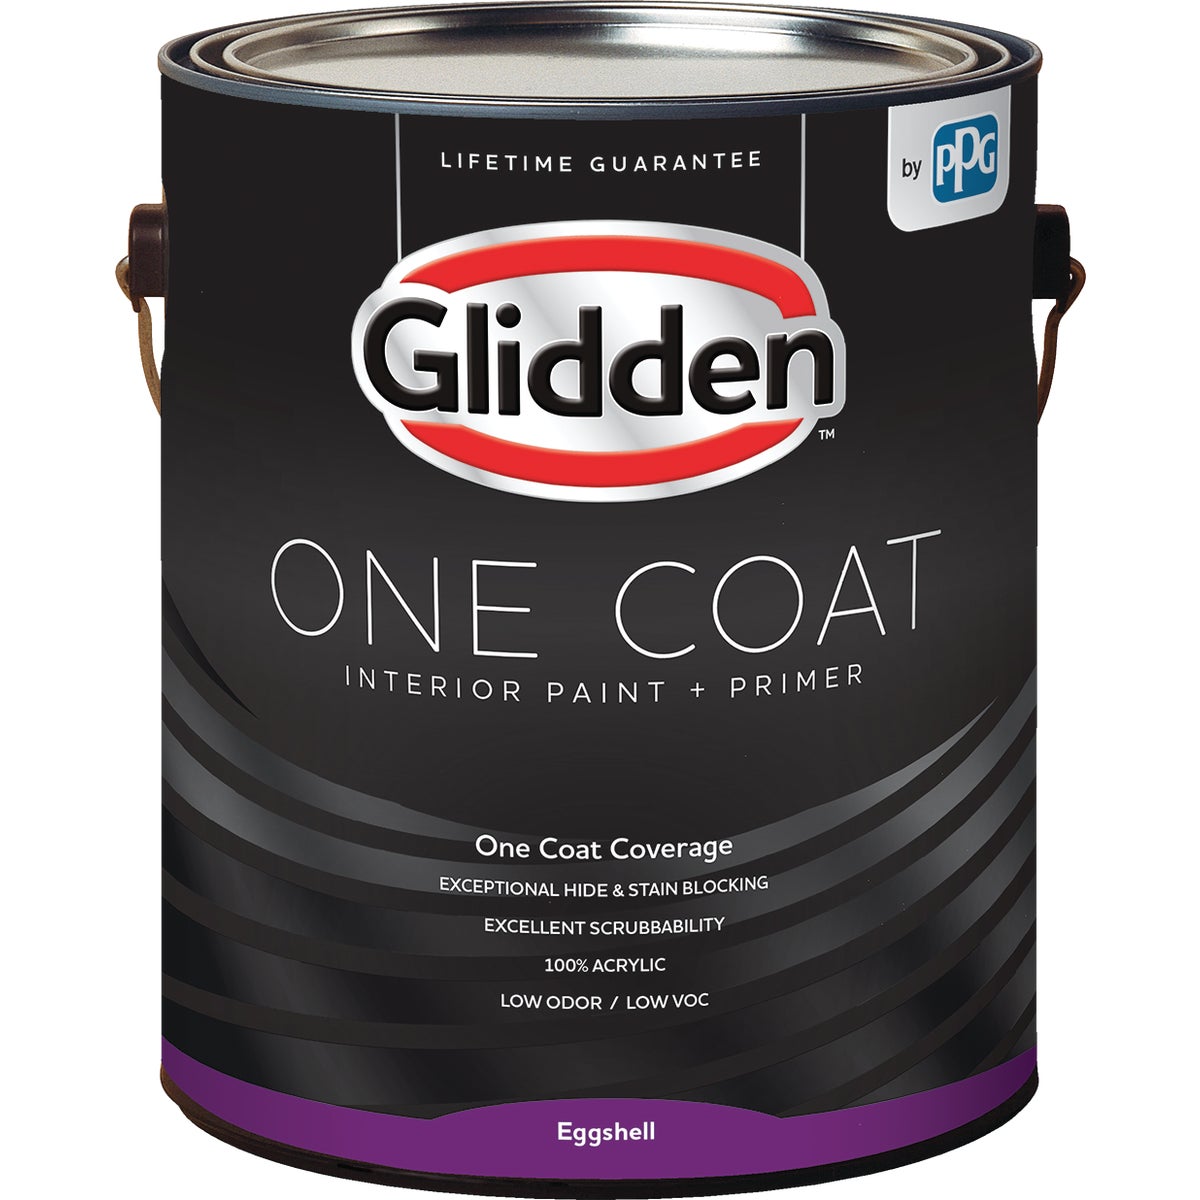 Glidden One Coat Interior Paint + Primer Eggshell White & Pastel Base 1 Gallon